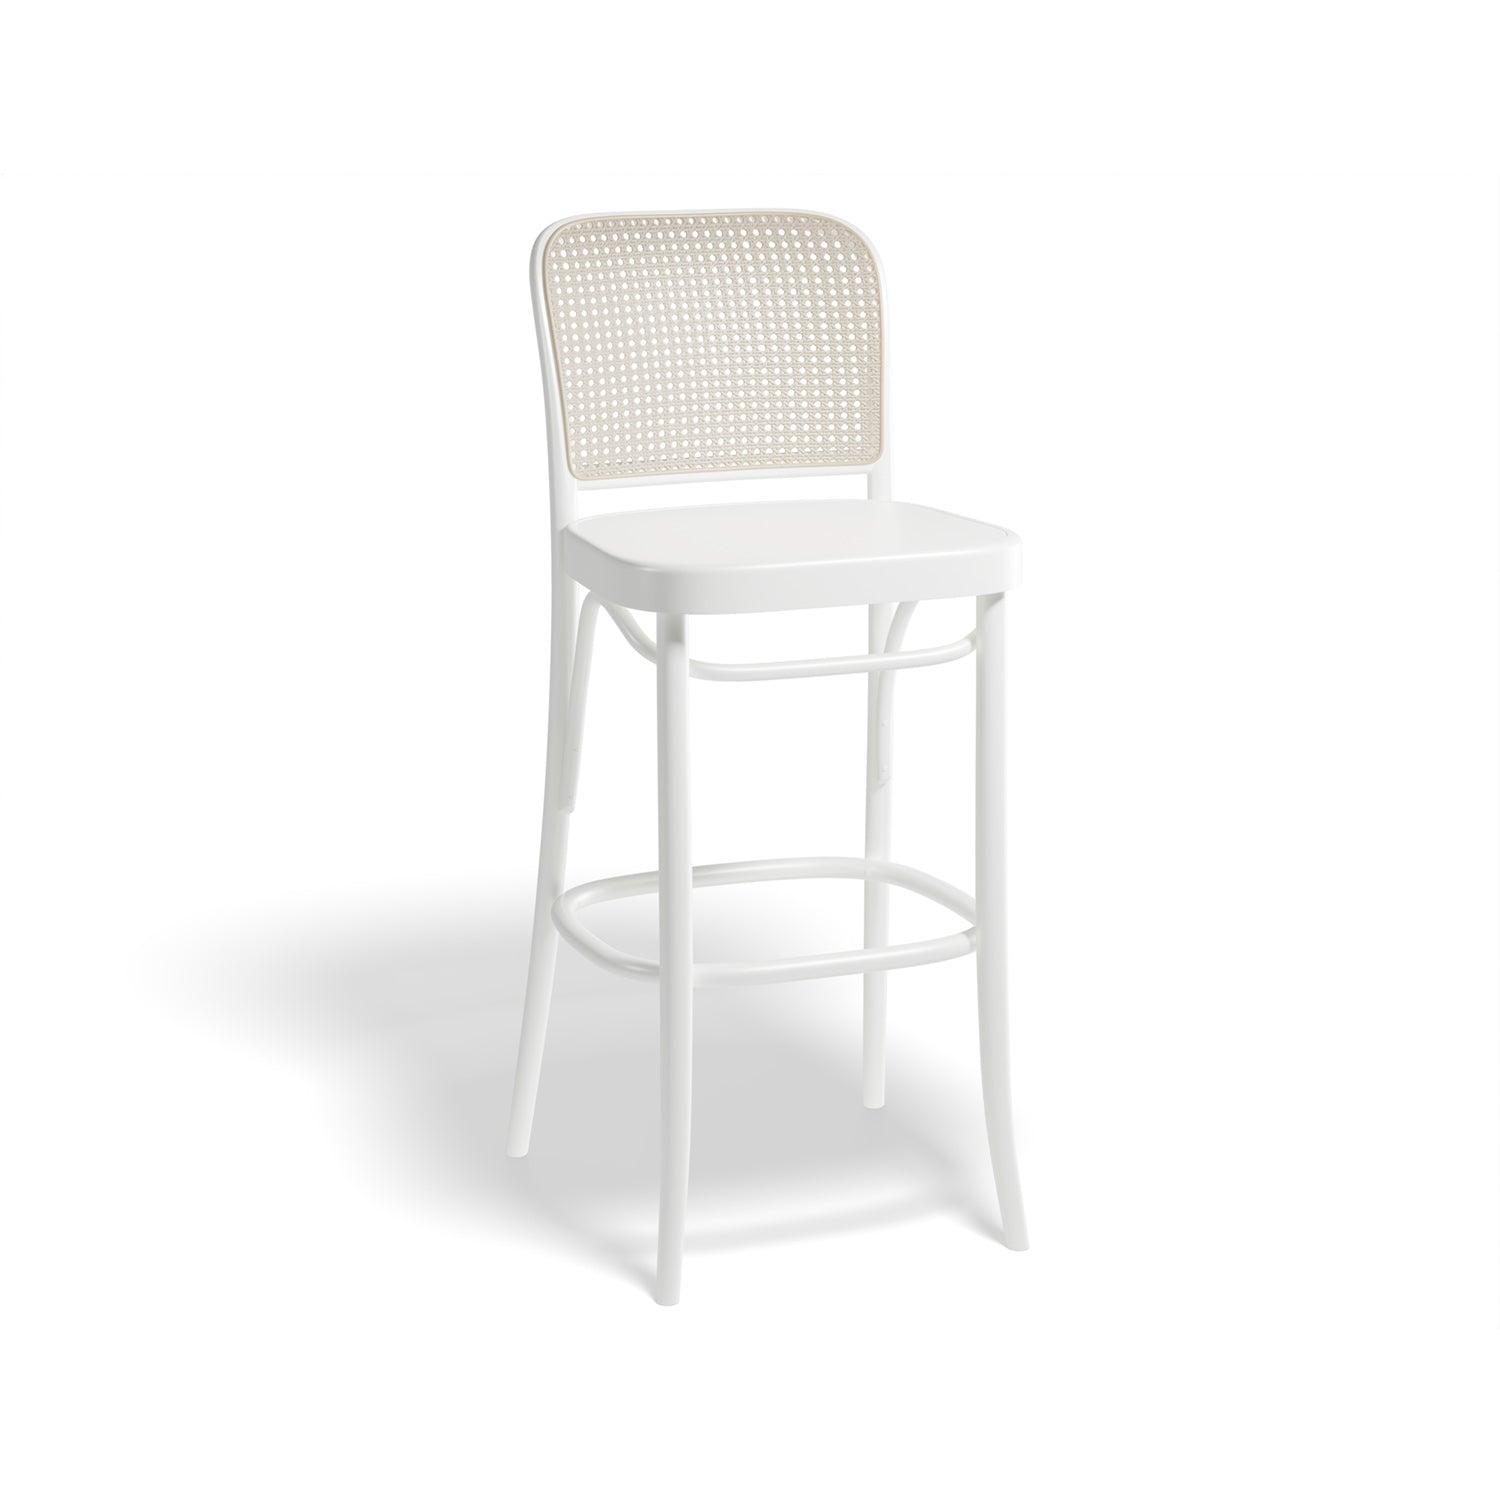 811 Hoffmann Bar Stool - Wood Seat/Cane Backrest (White)